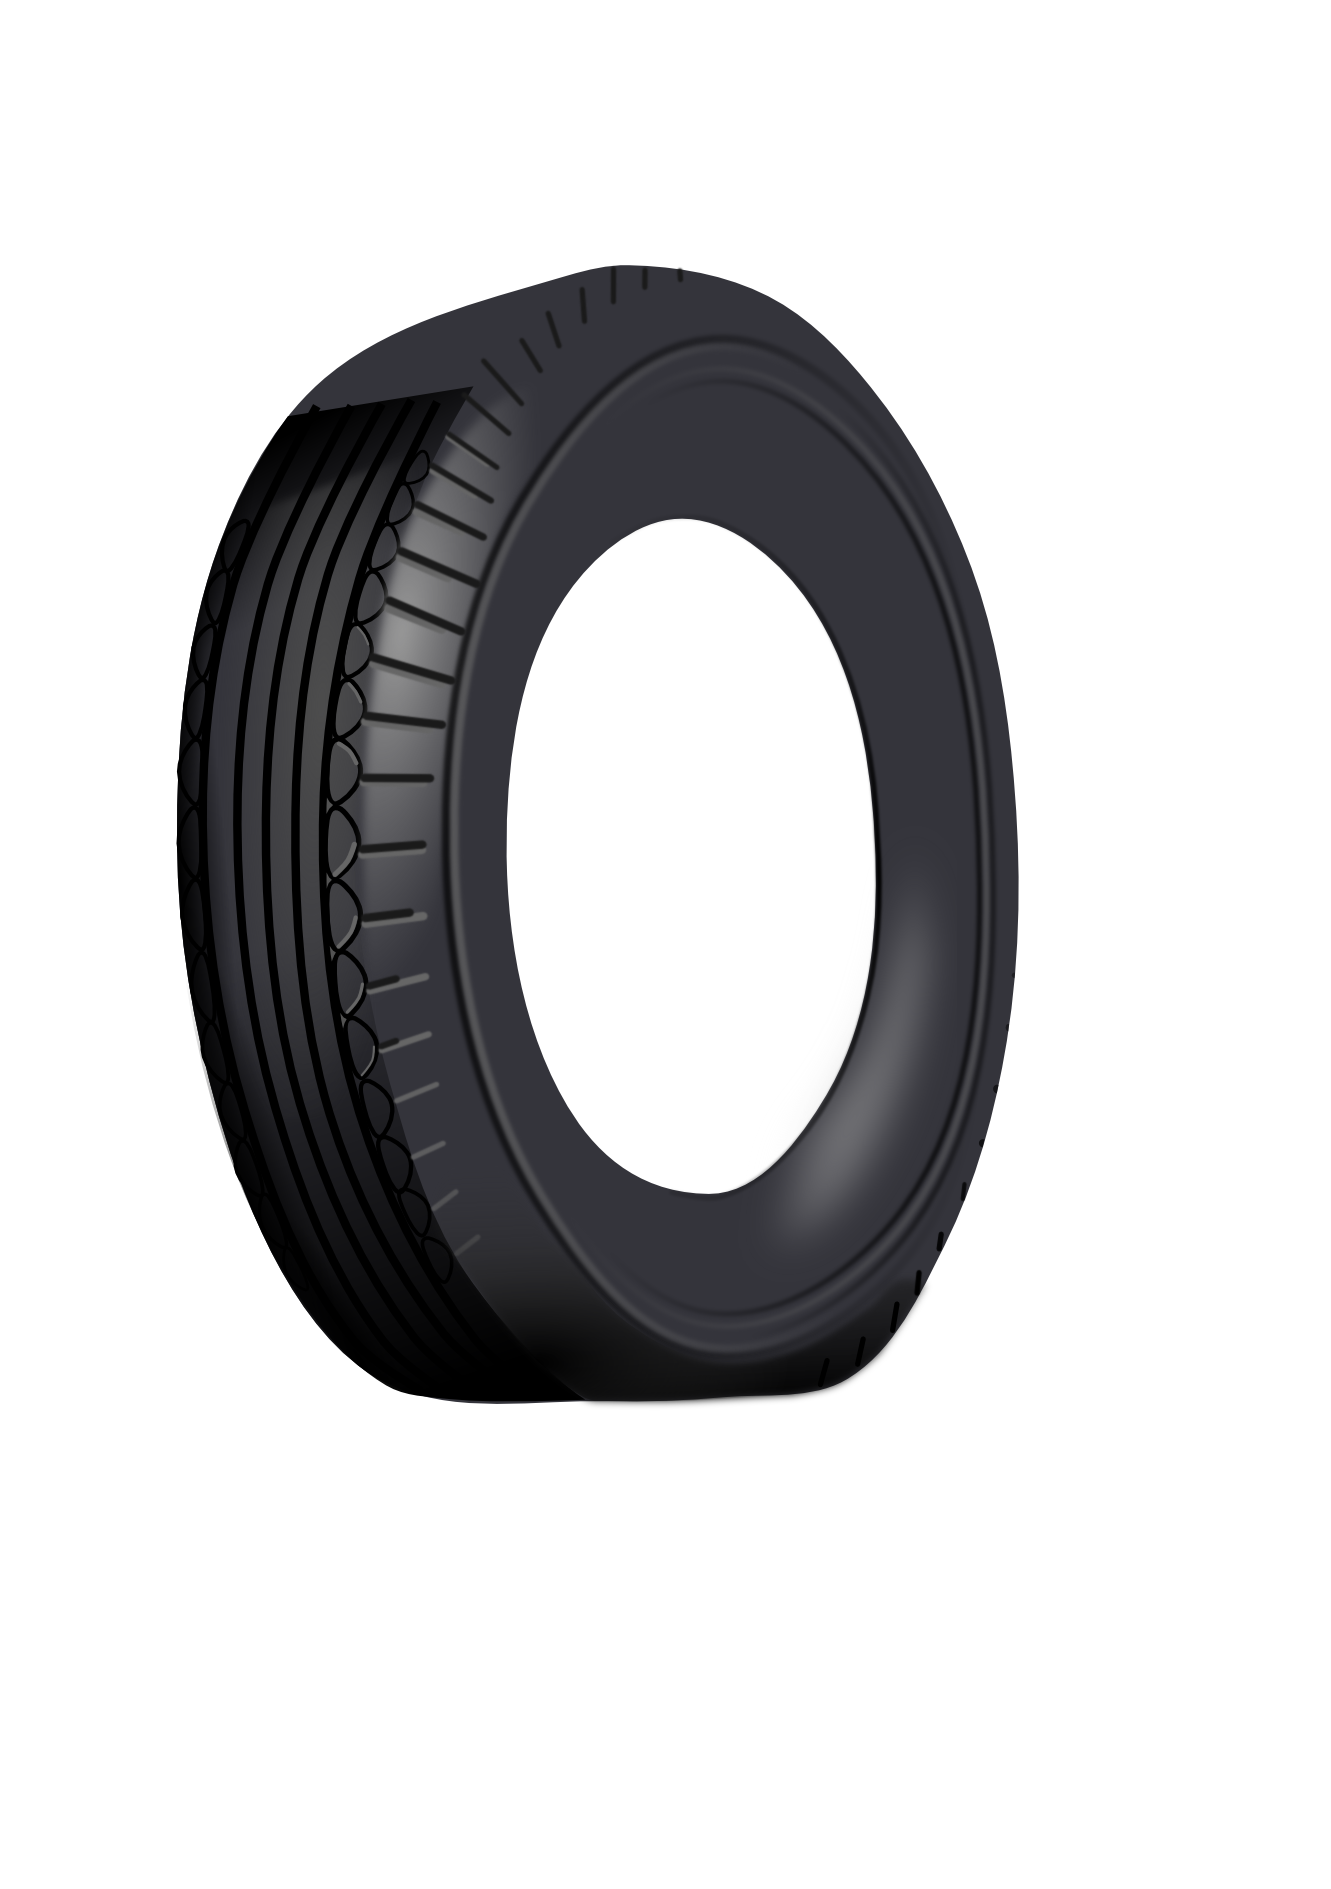 Tire Vector   Clipart Best